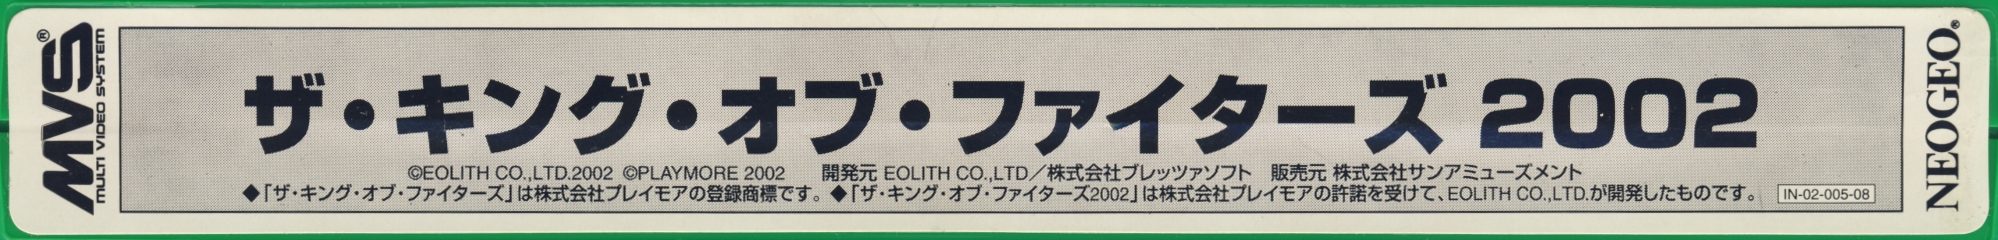 Kof2002 jp label.jpg